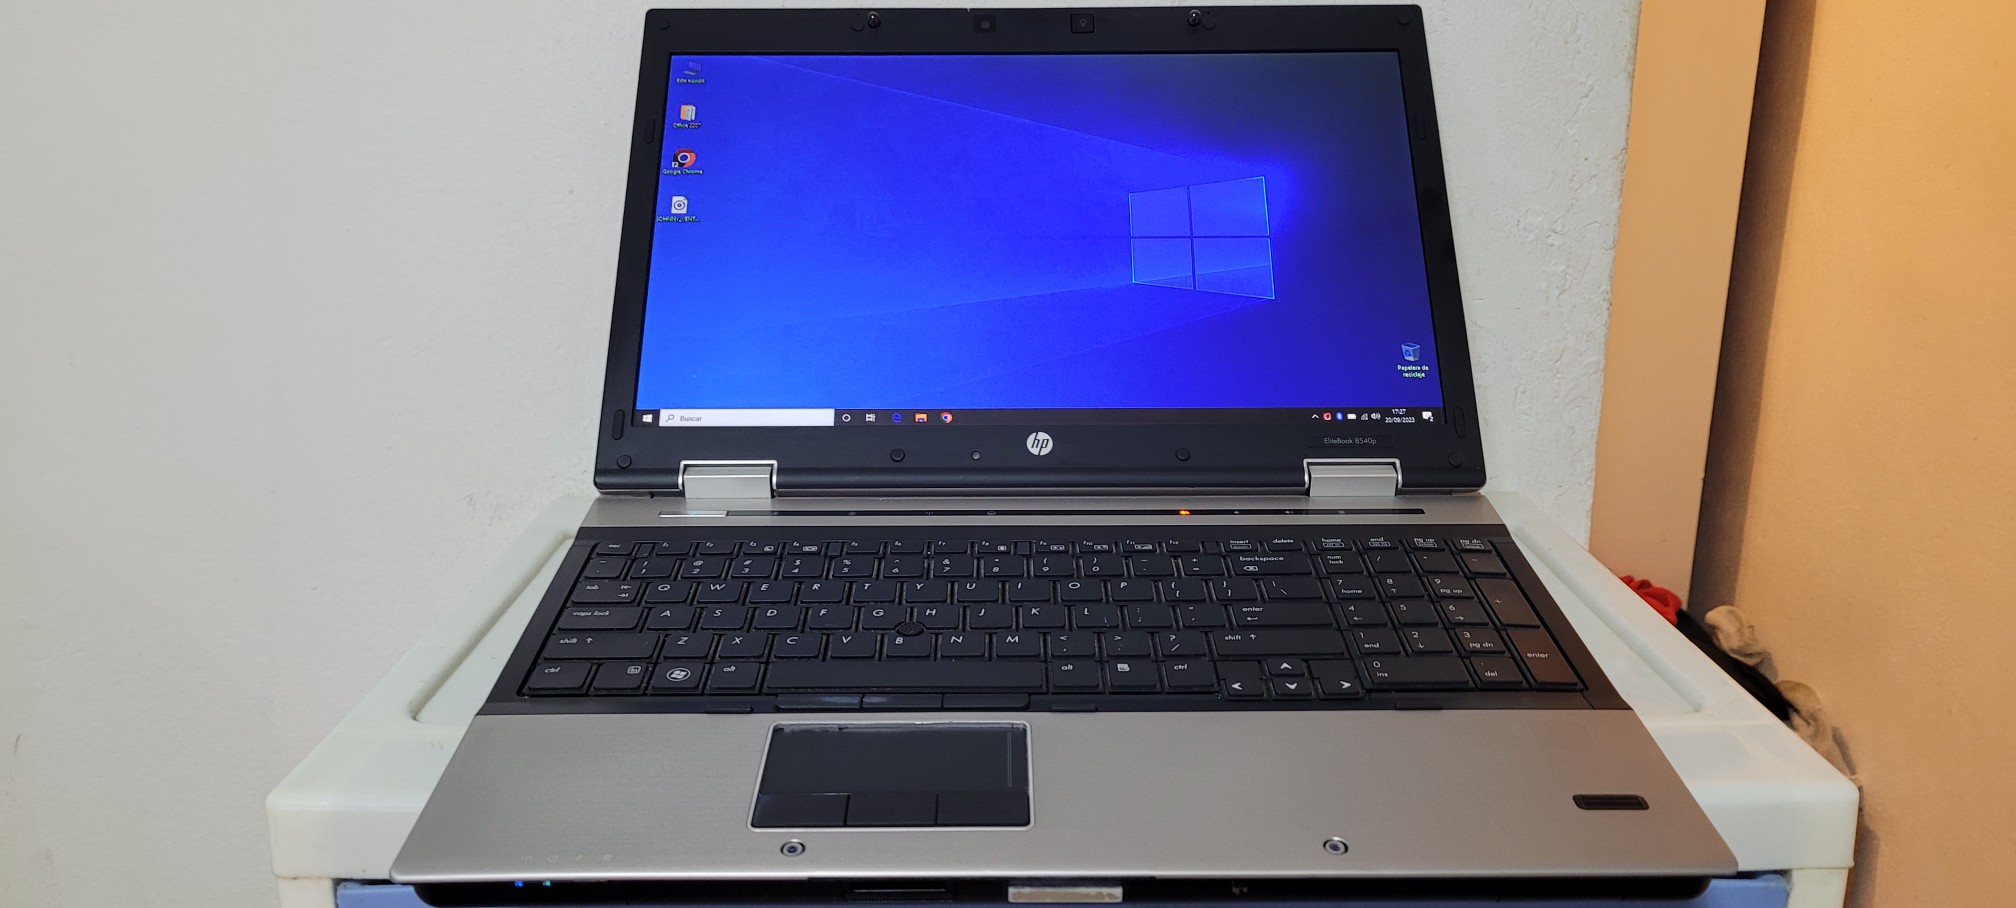 computadoras y laptops - Laptop hp 17 Pulg Core i7 Ram 8gb SSD 128GB Nvidea 1gb Dedicada 0